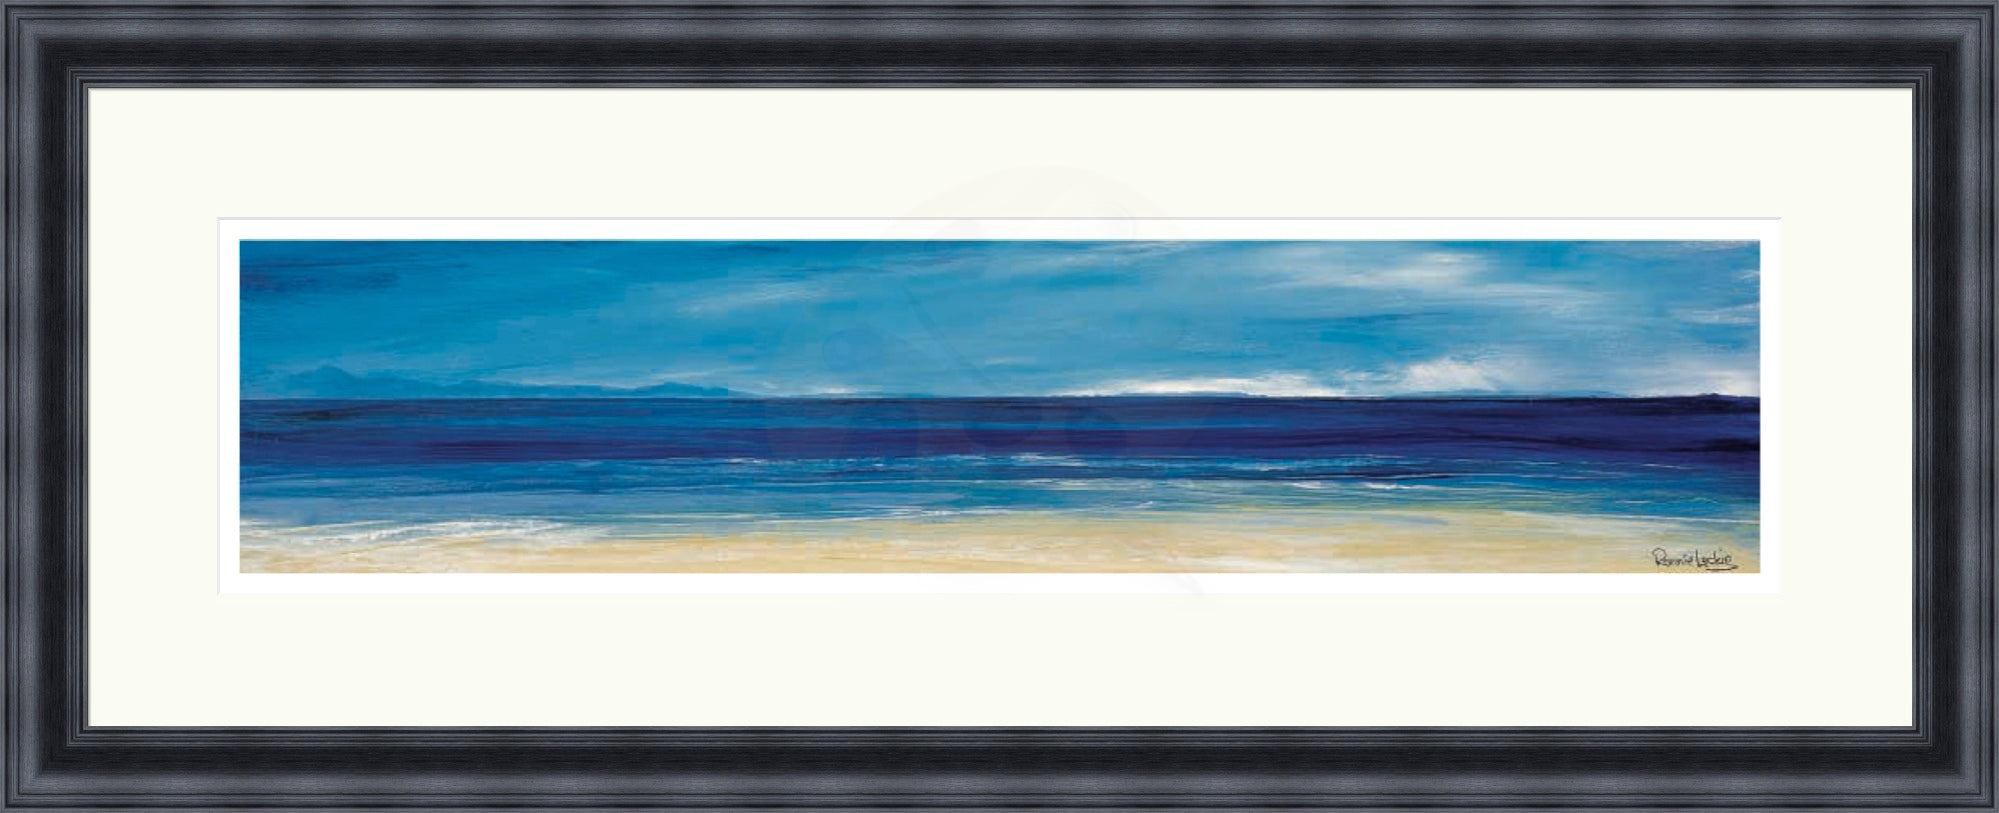 West Coast Scotland 1 by Ronnie Leckie – Art Prints Gallery